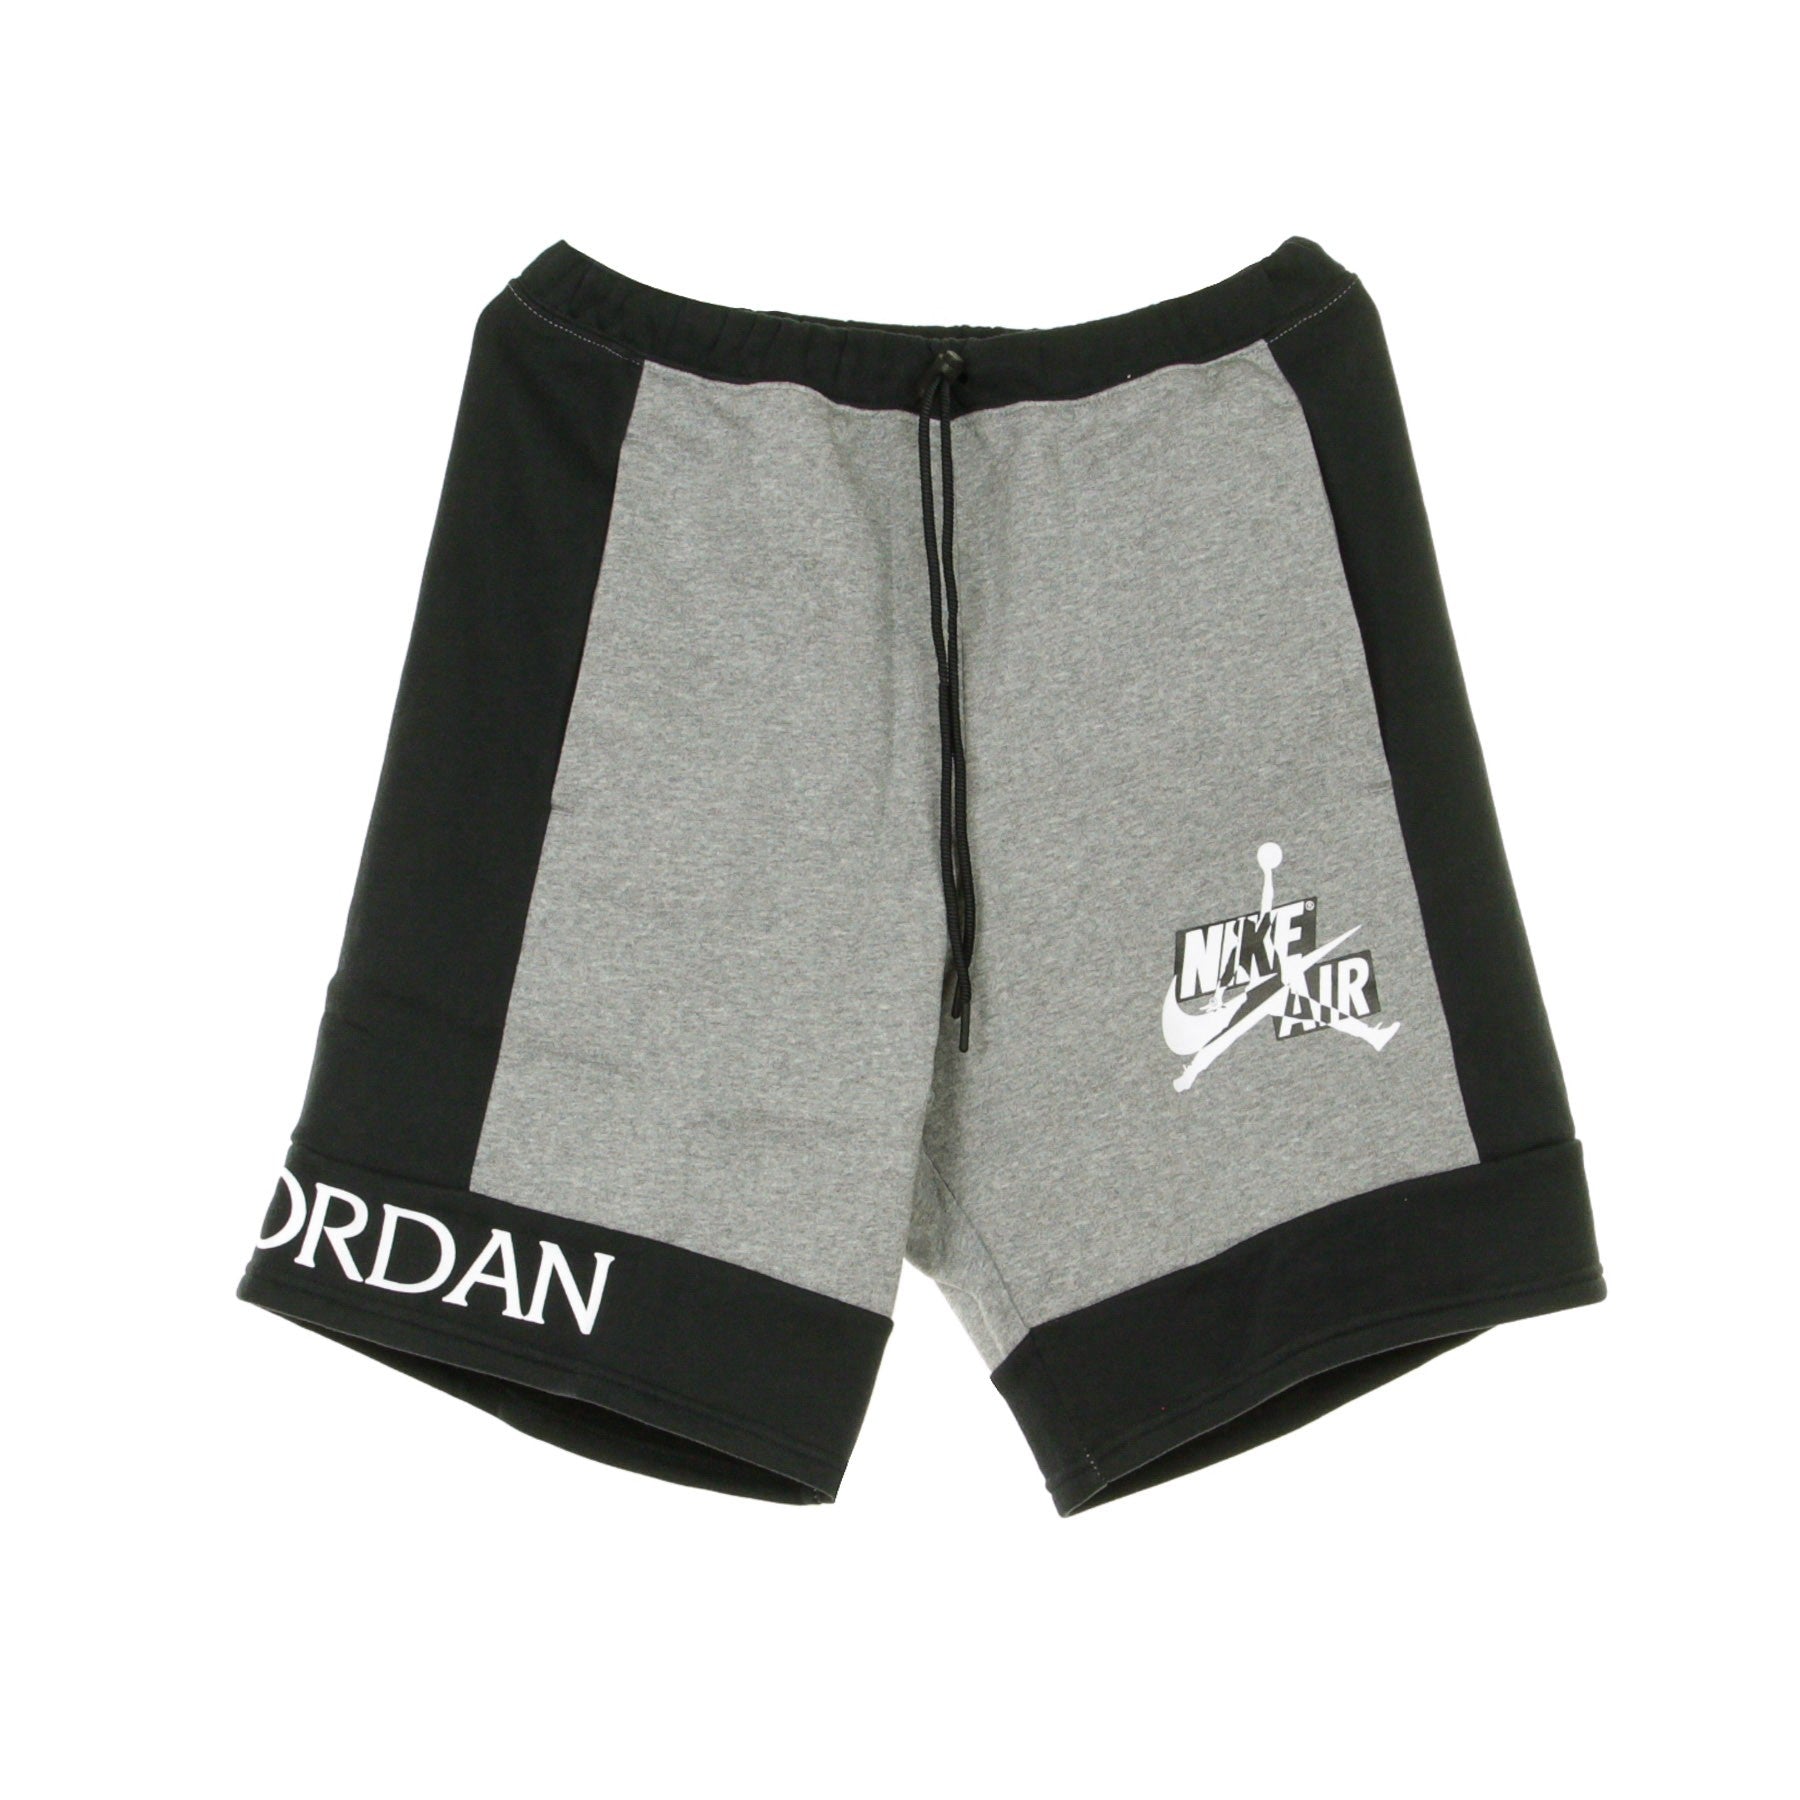 Jordan, Pantalone Corto Tuta Felpato Uomo  Jumpman Classics Short, Carbon Heather/black